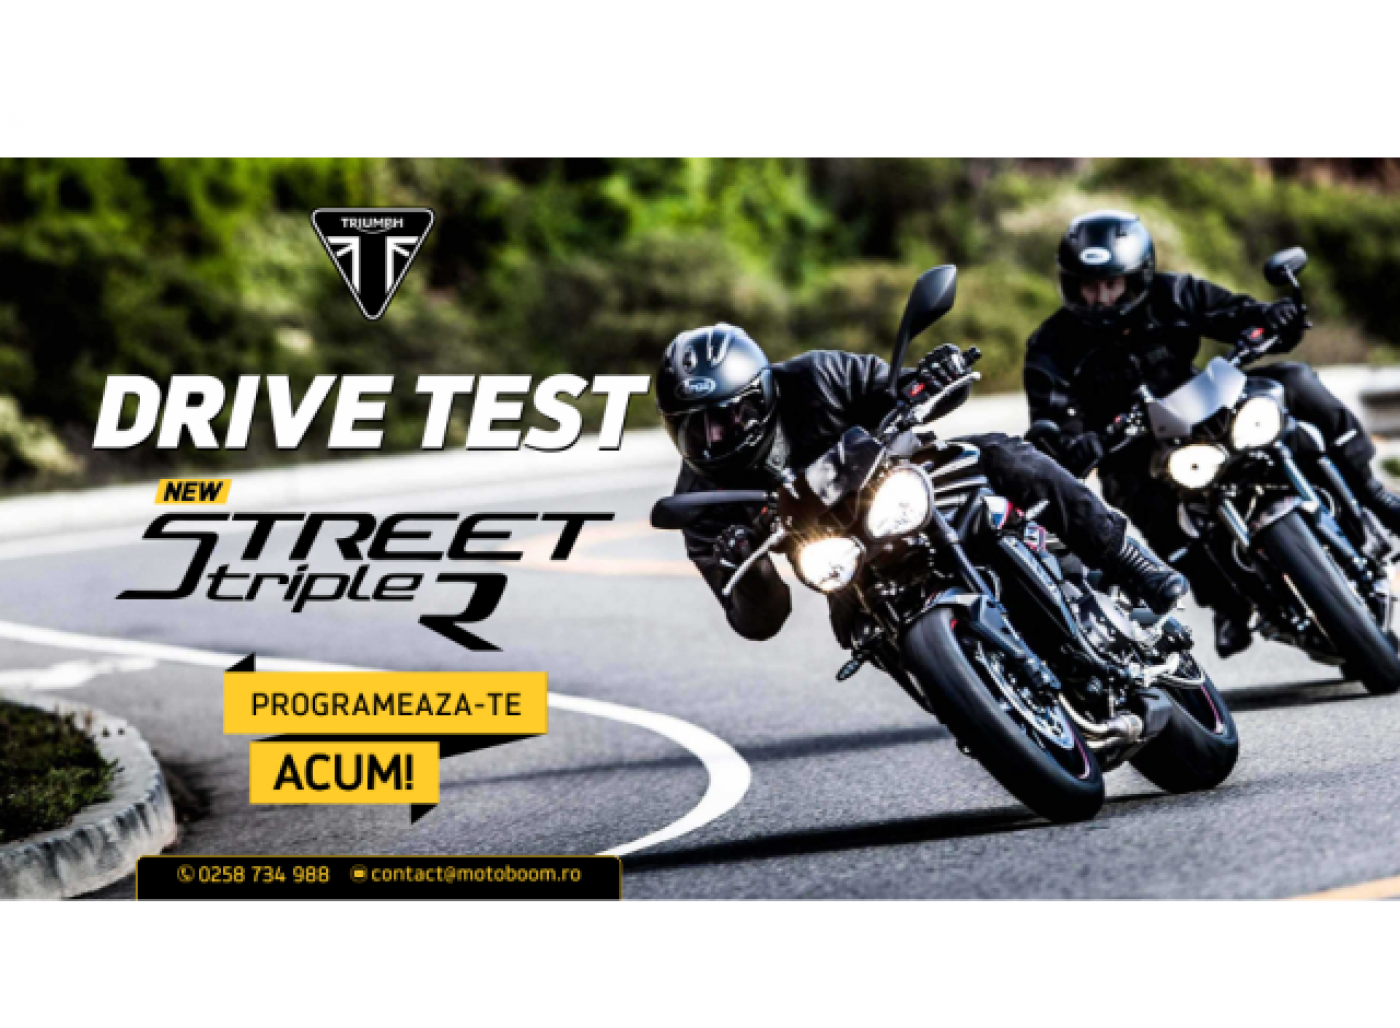 Noul Triumph Street Triple R, disponibil pentru ride-test la Motoboom